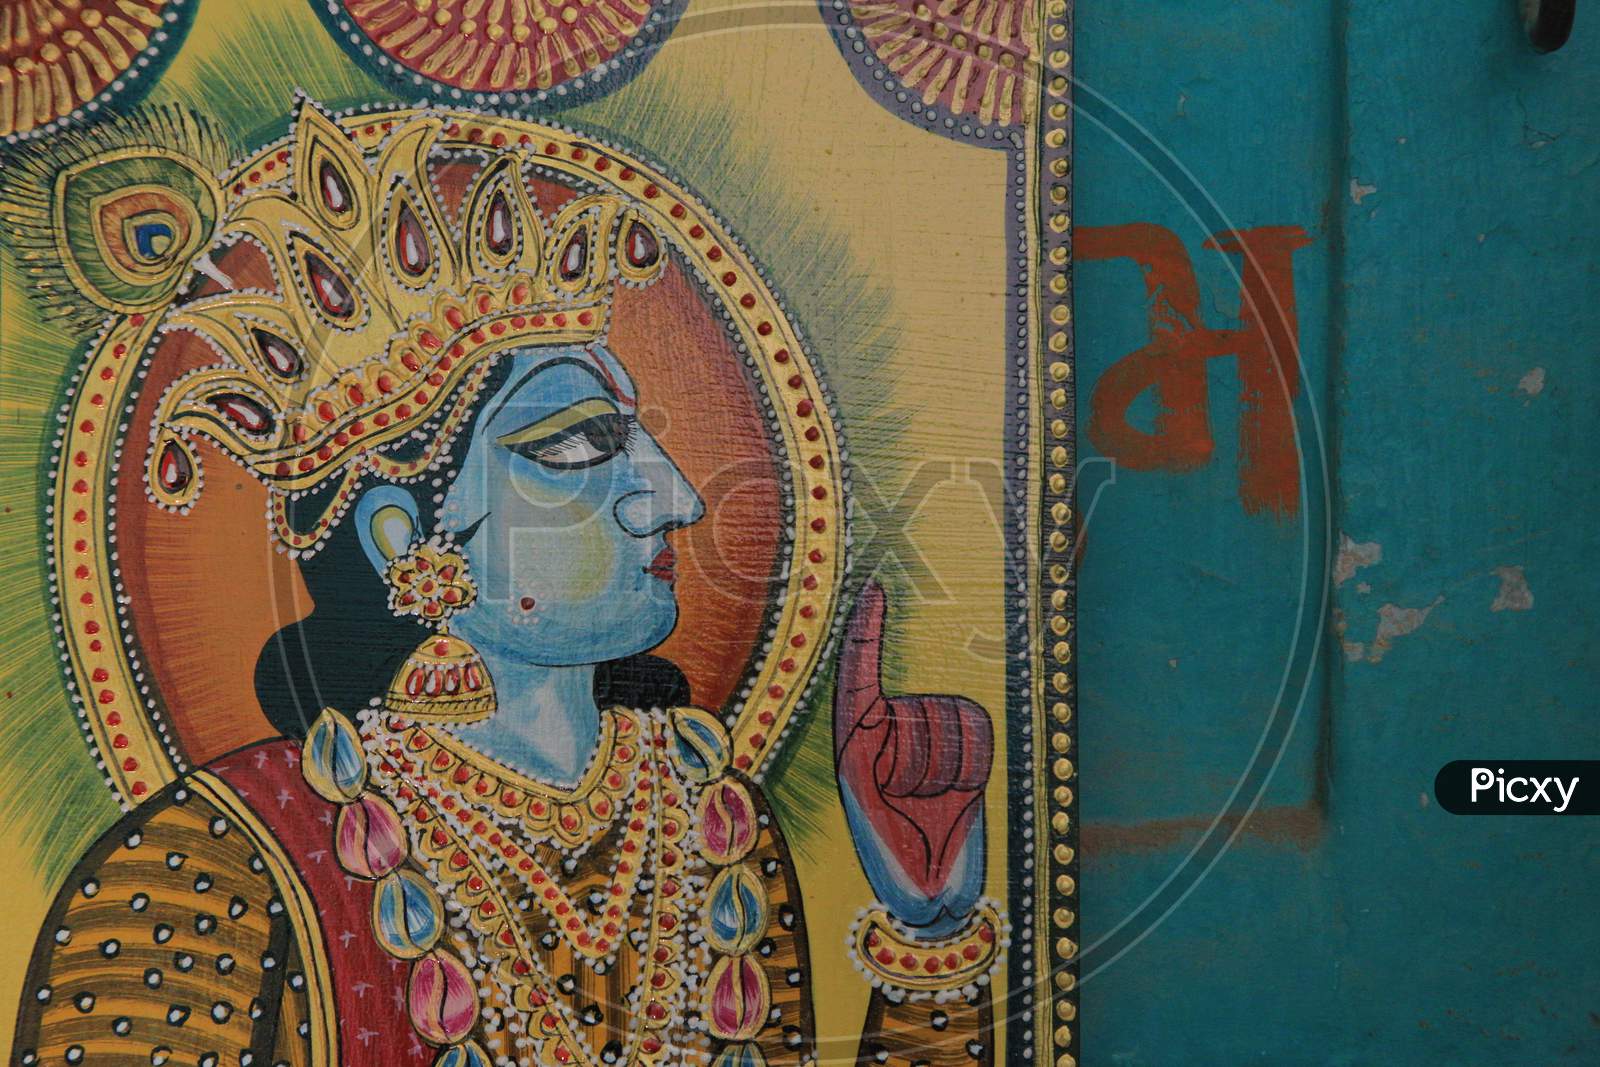 Indian Hindu God painting